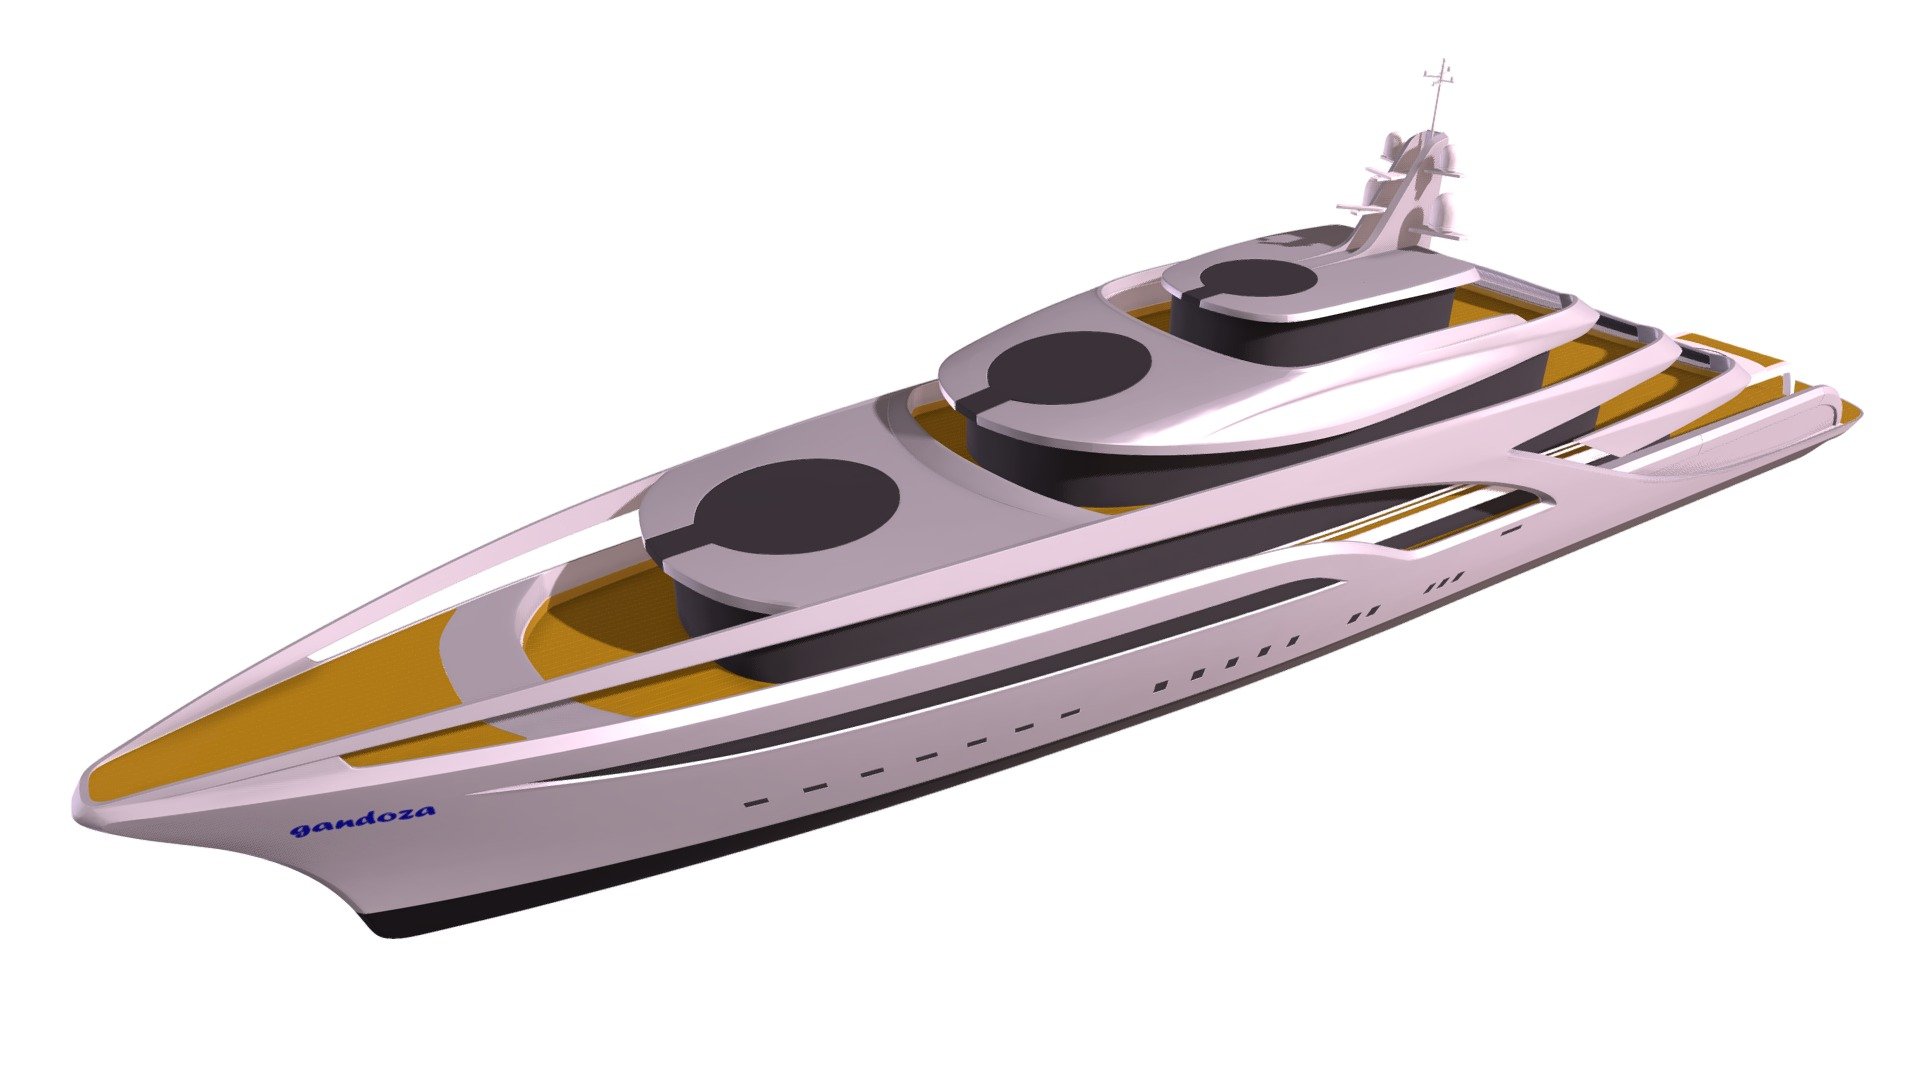 High quality 3d model of luxury superyacht 3d model